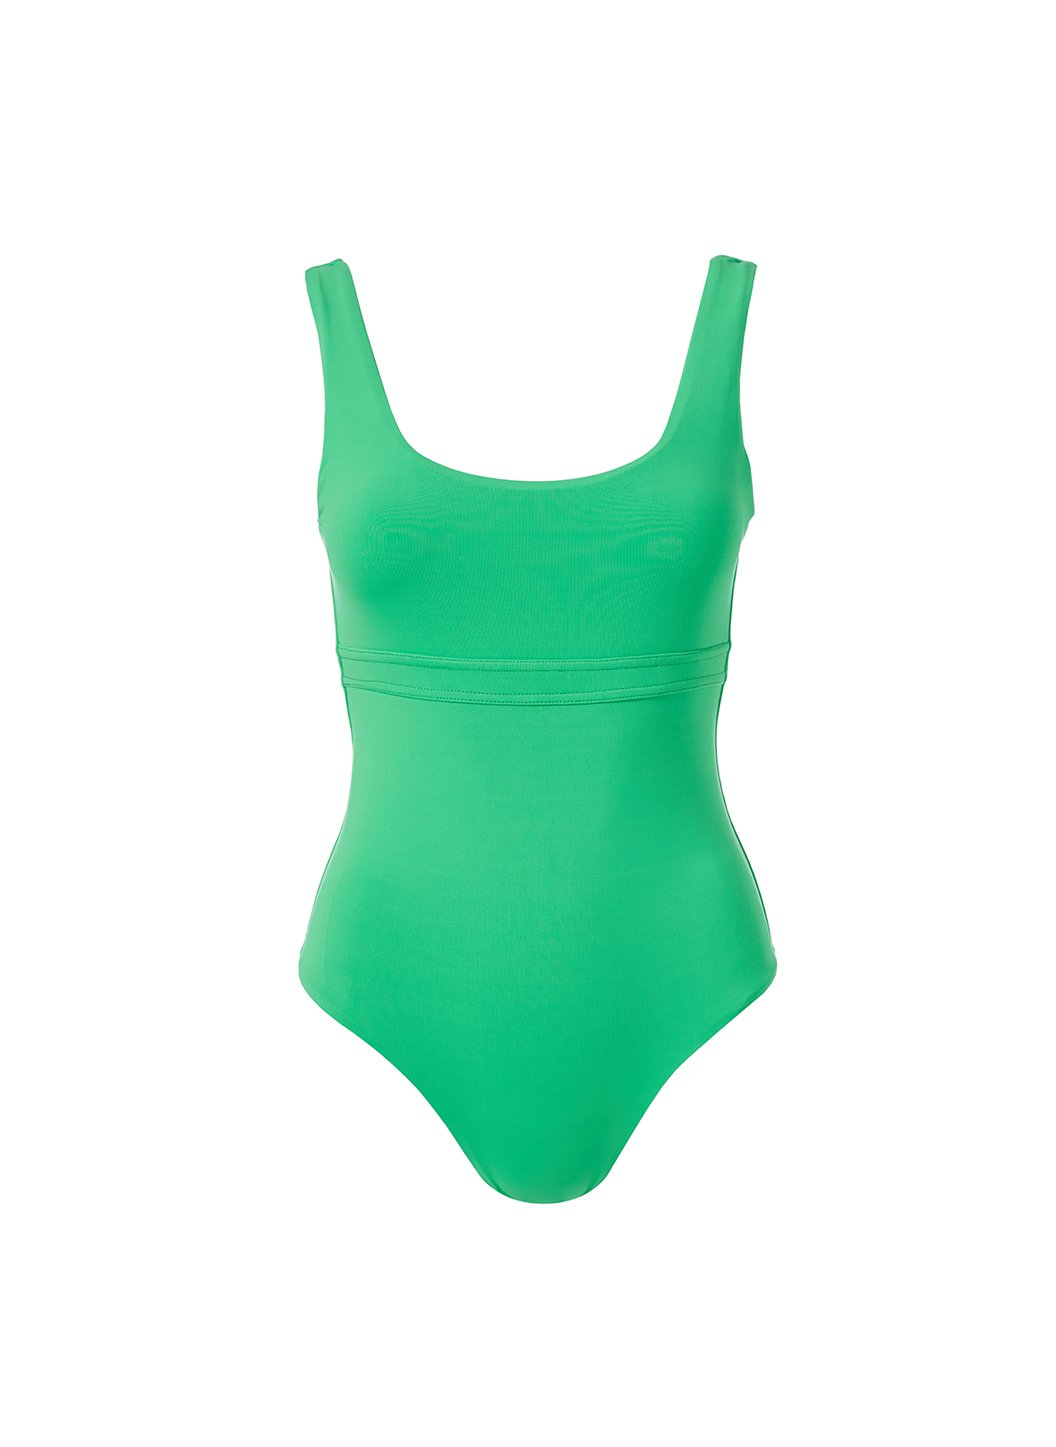 Kos Green Swimsuit